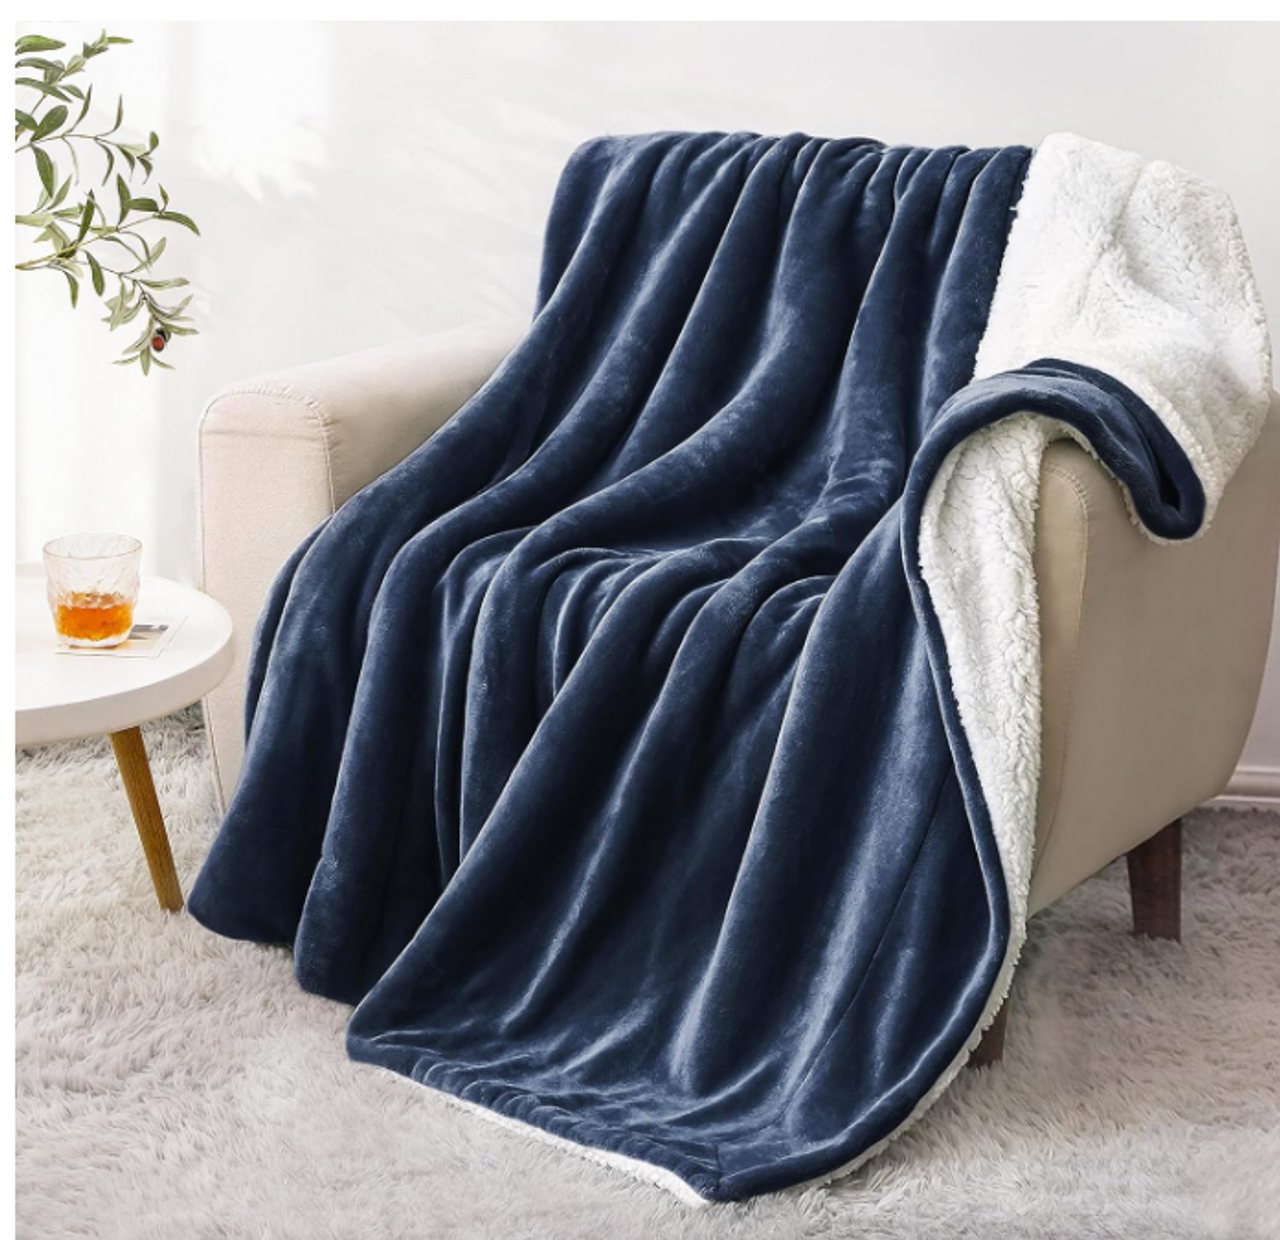 Fleece Blanket - Thick Warm Blankets for Winter, Reversible Soft